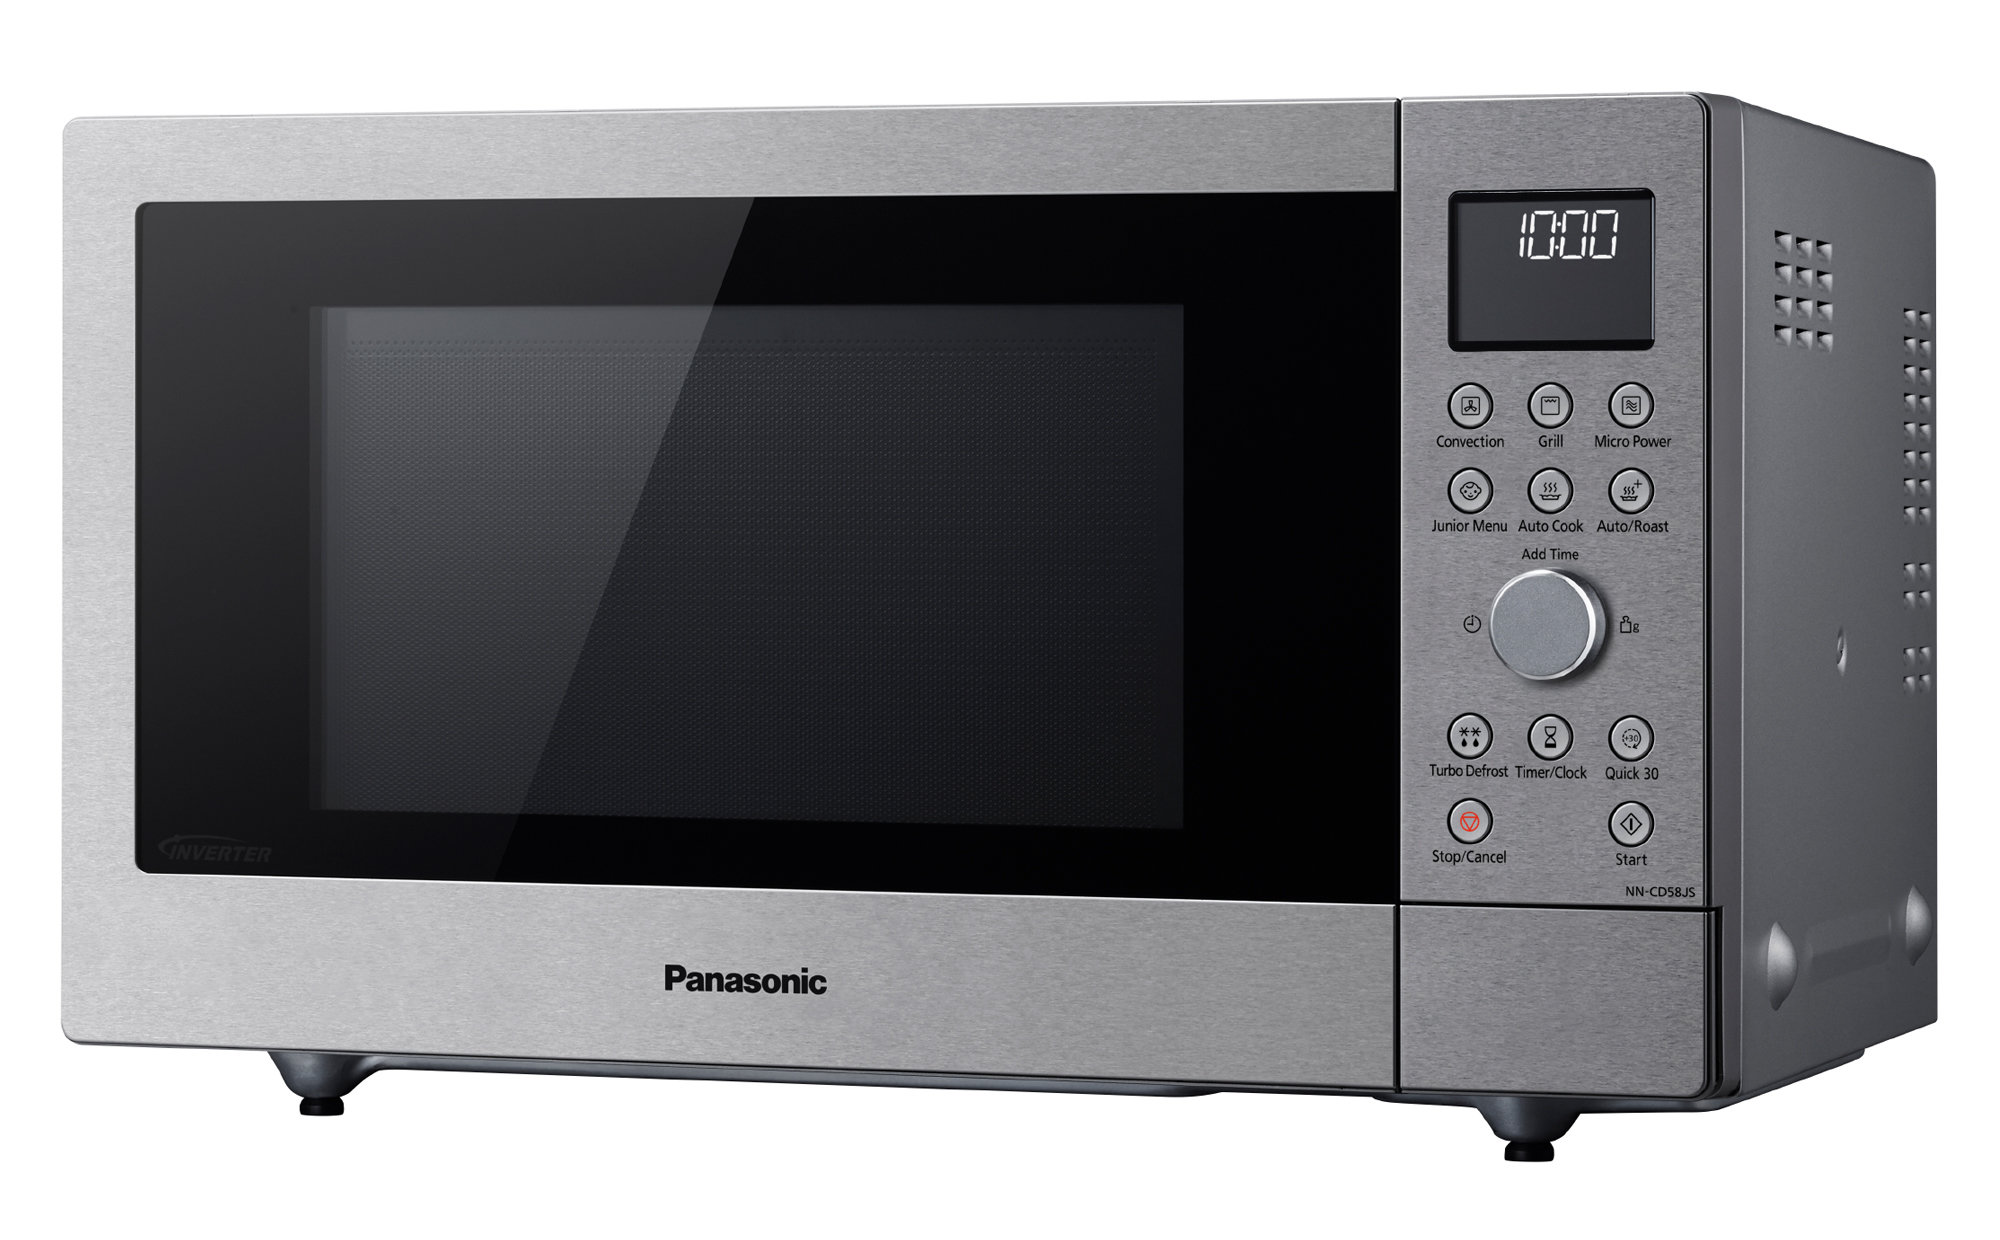 How Do You Program A Panasonic Microwave / Panasonic Nn Sn671s Family